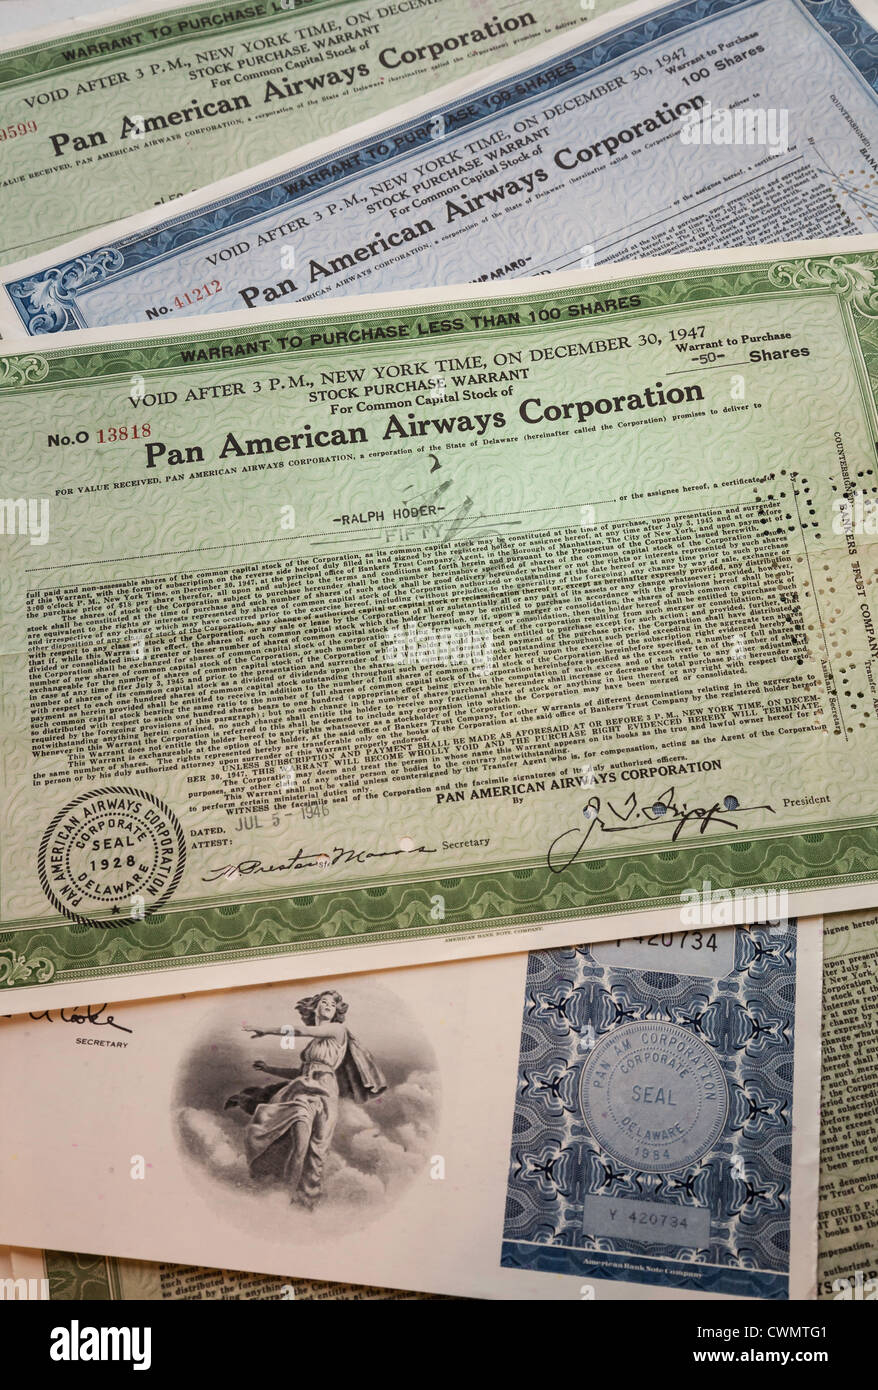 Pan American World Airways Stock Certificate, USA Stock Photo